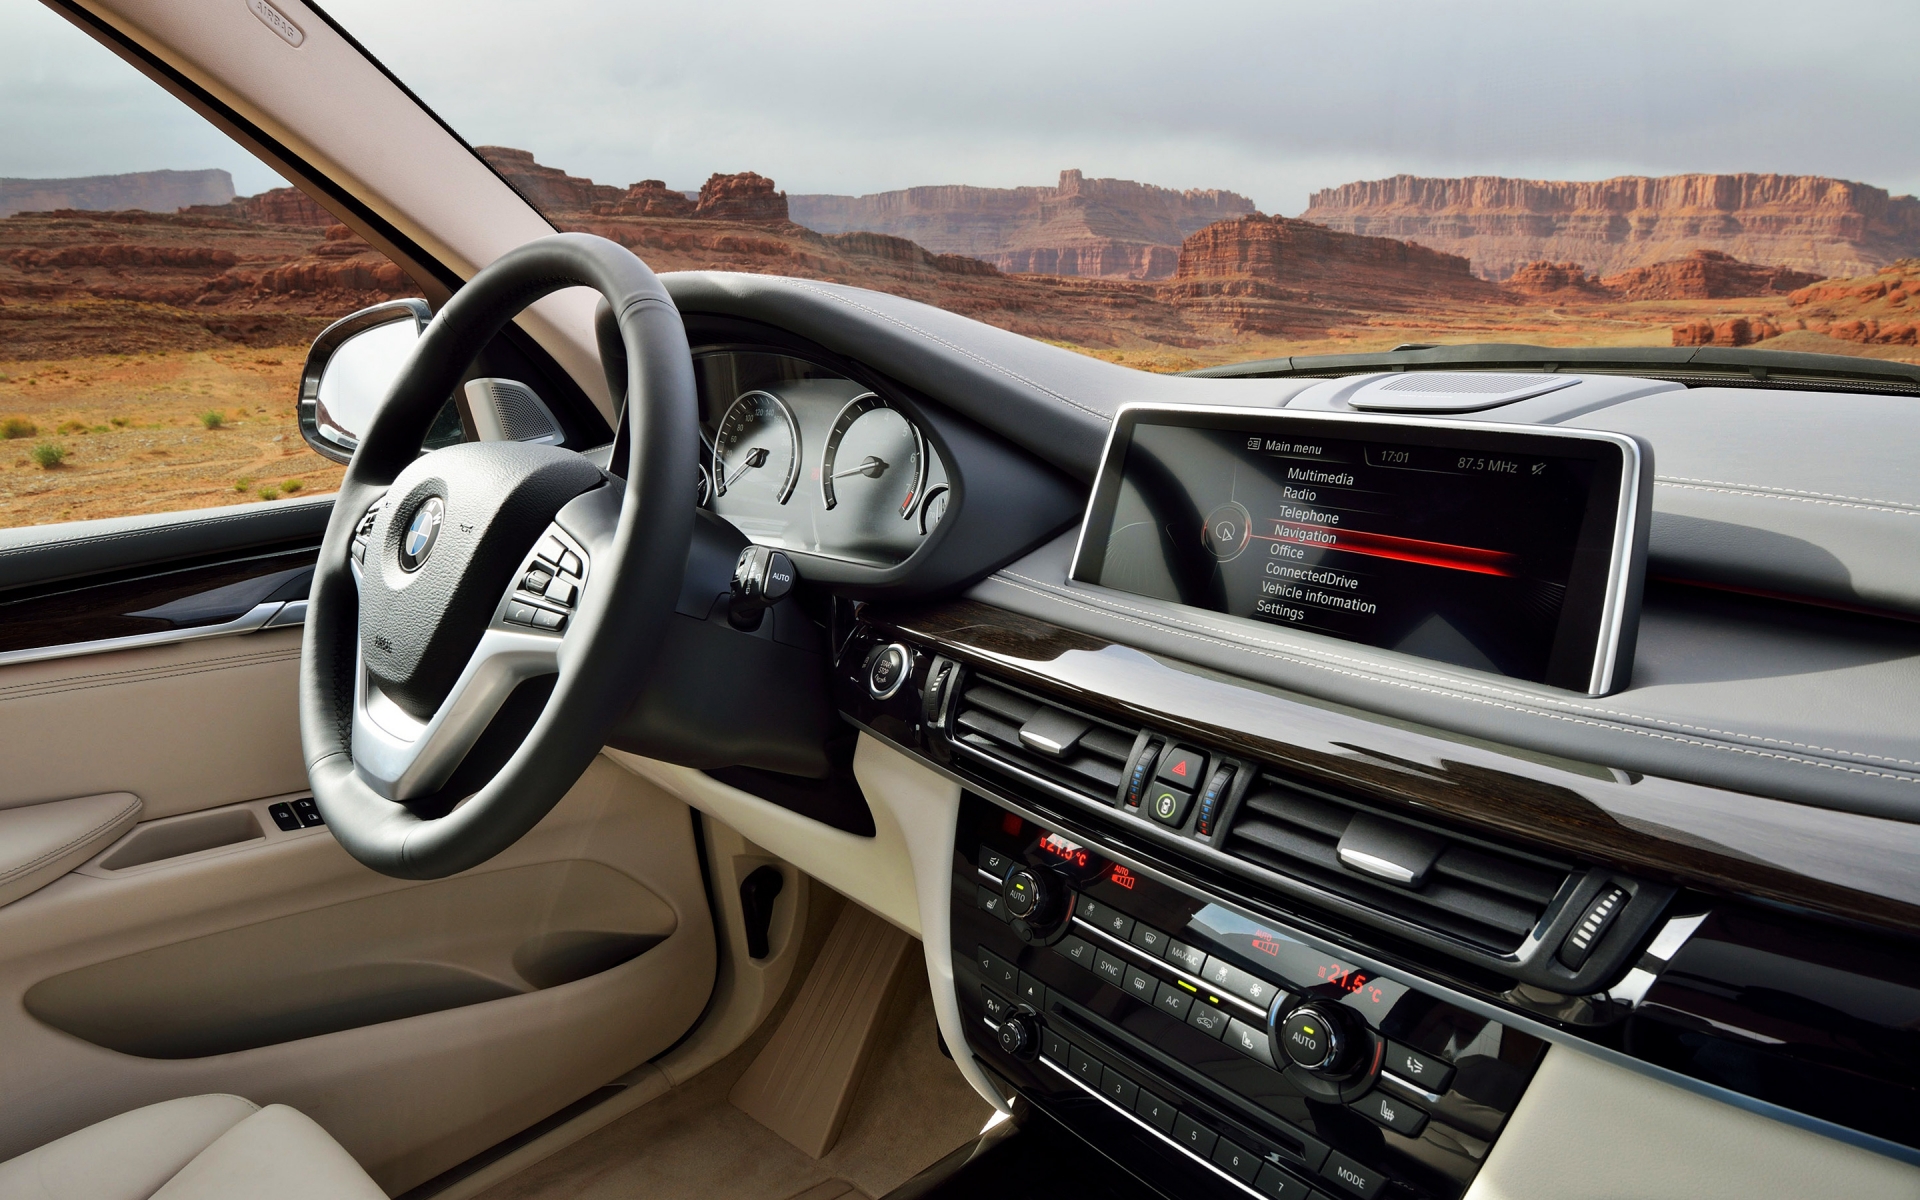 BMW X5 2014 Dashboard for 1920 x 1200 widescreen resolution